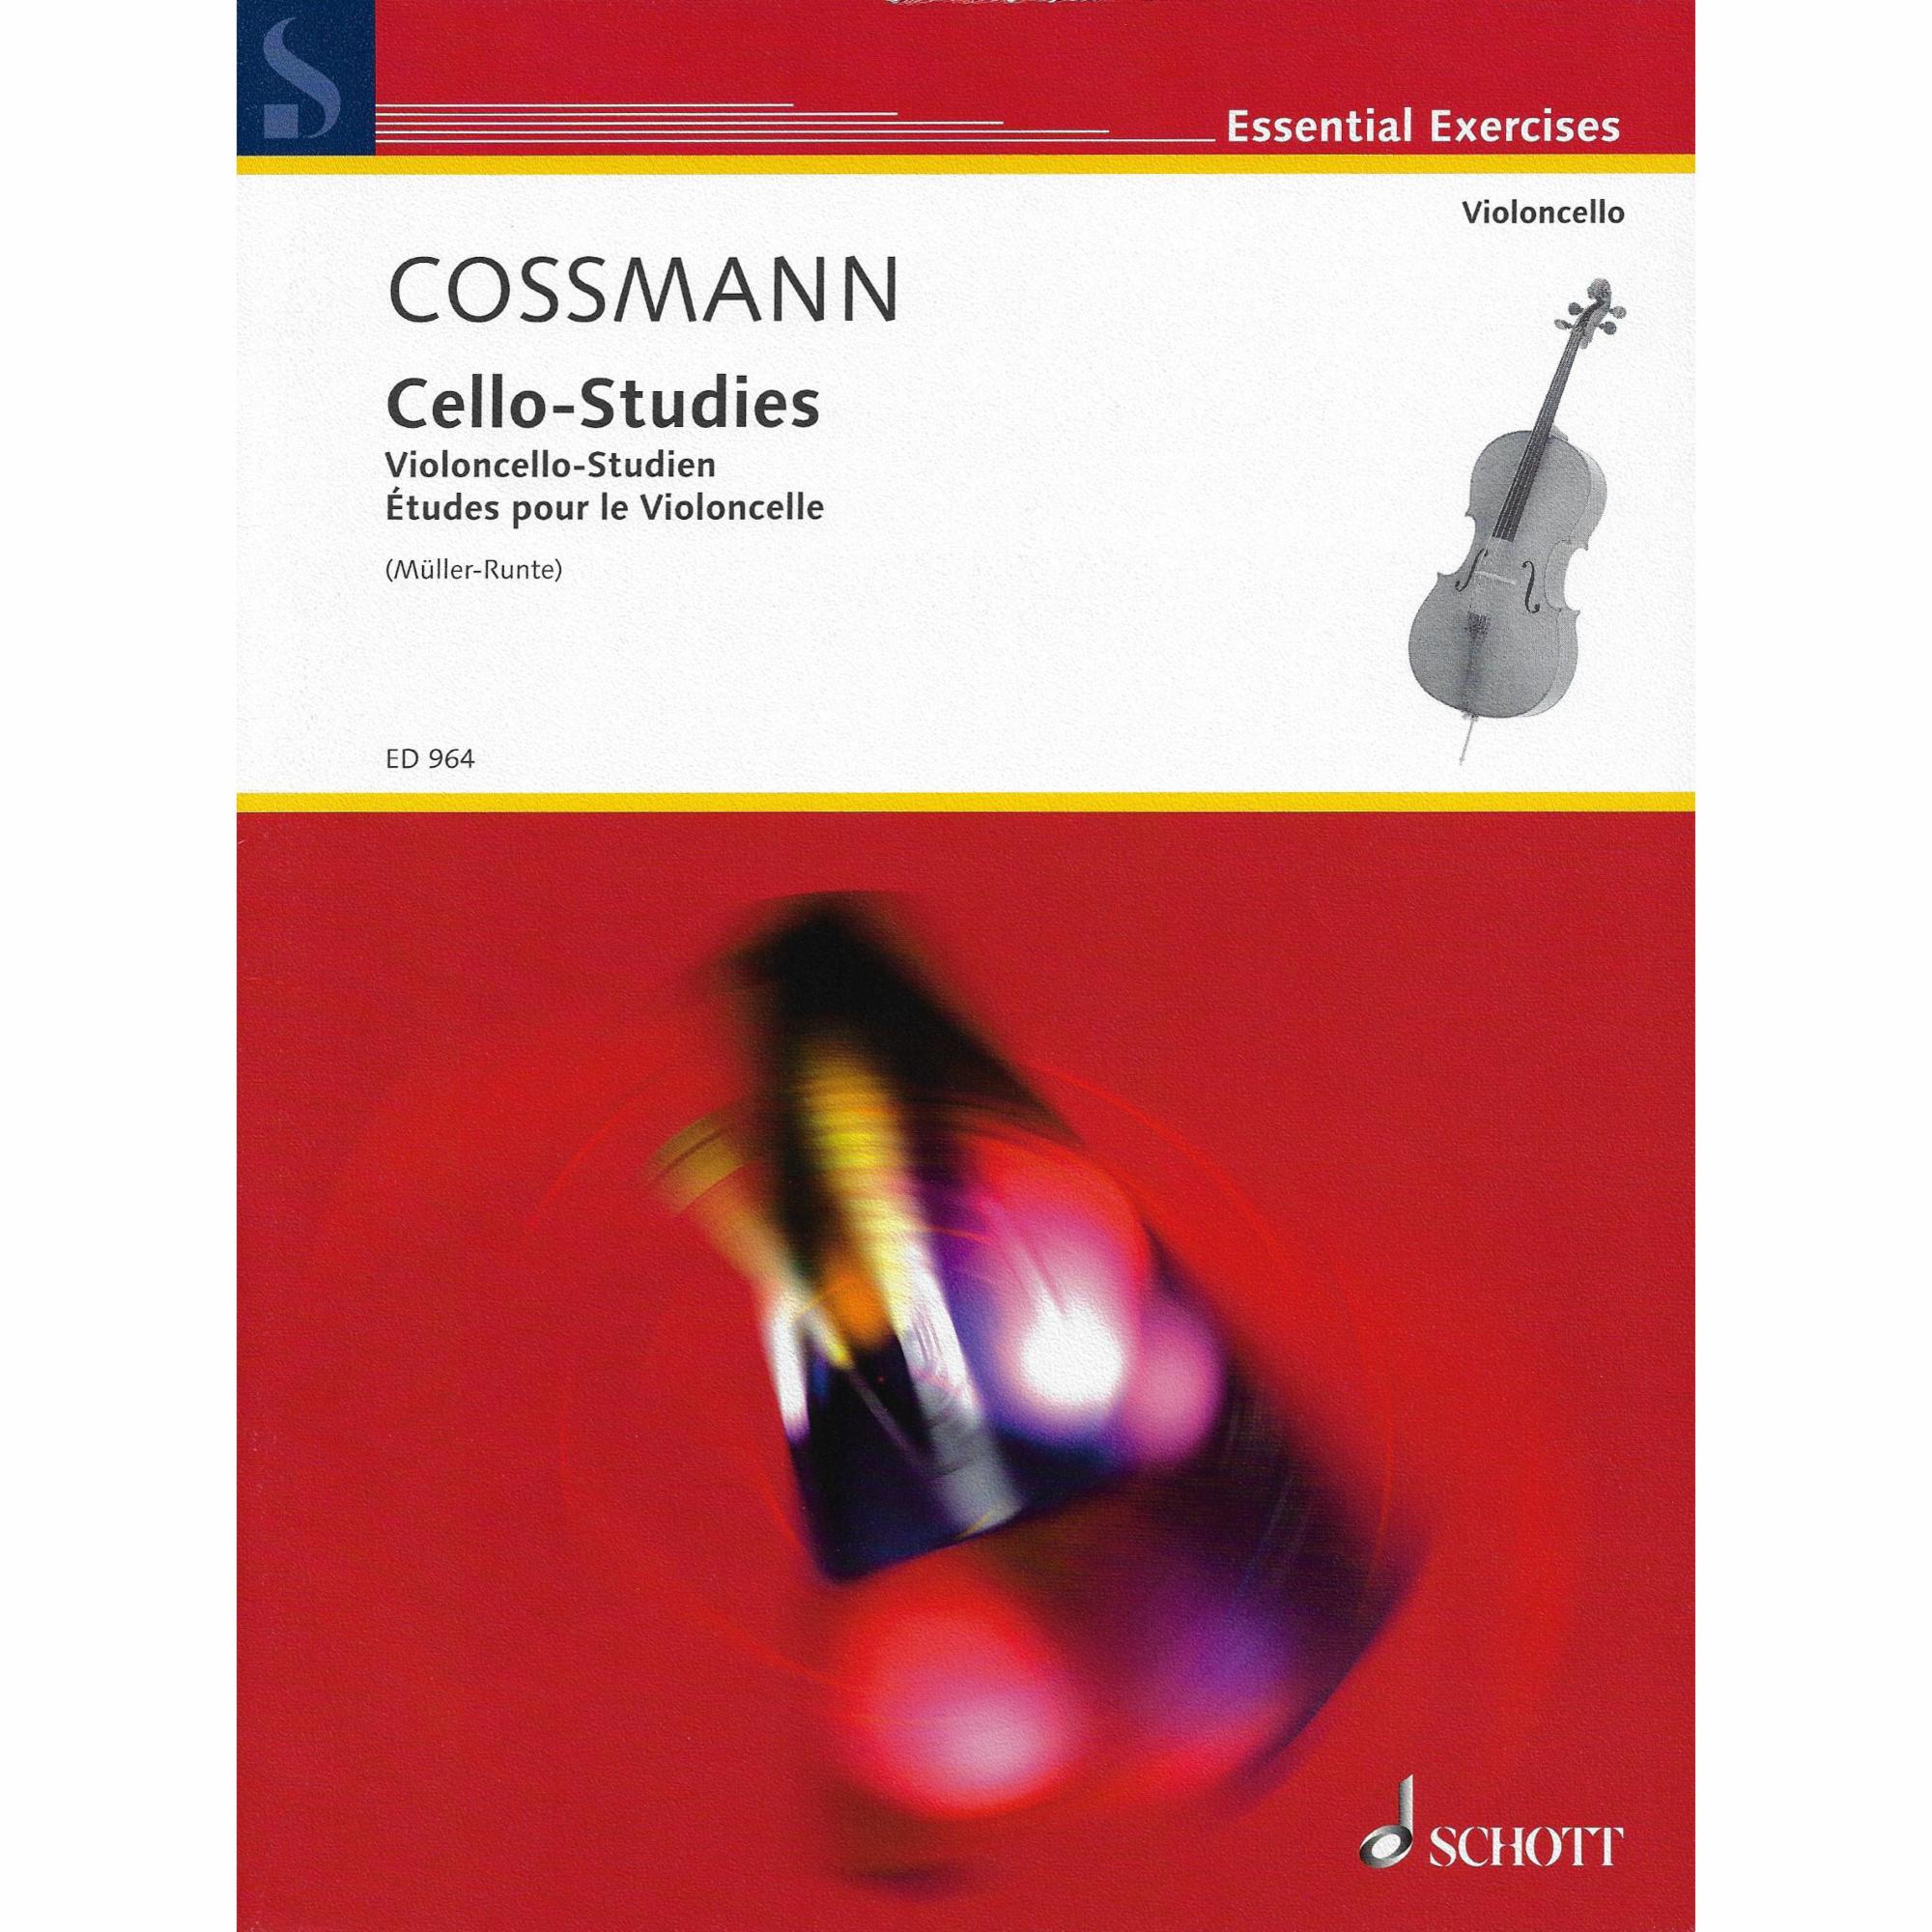 Cossmann -- Cello-Studies